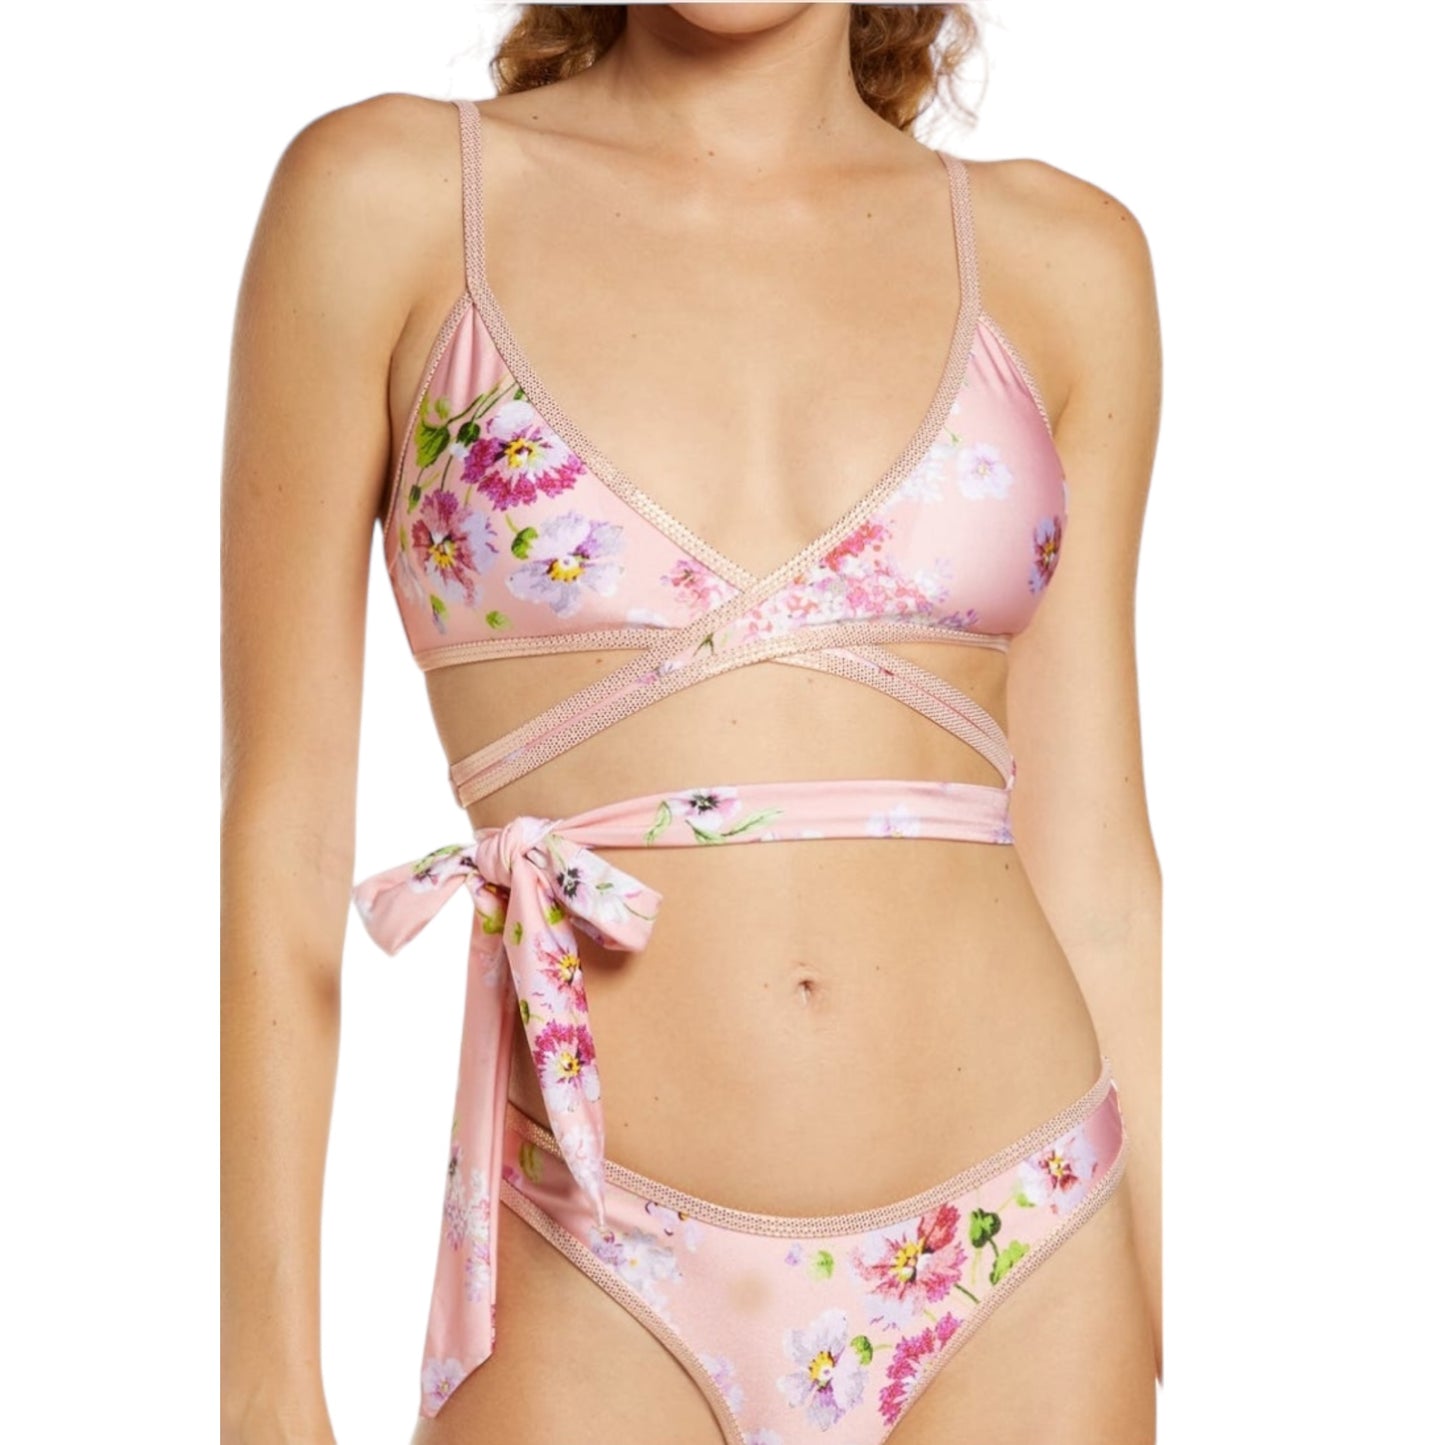 River Island Embellished Trim Floral Wrap Bikini Top only